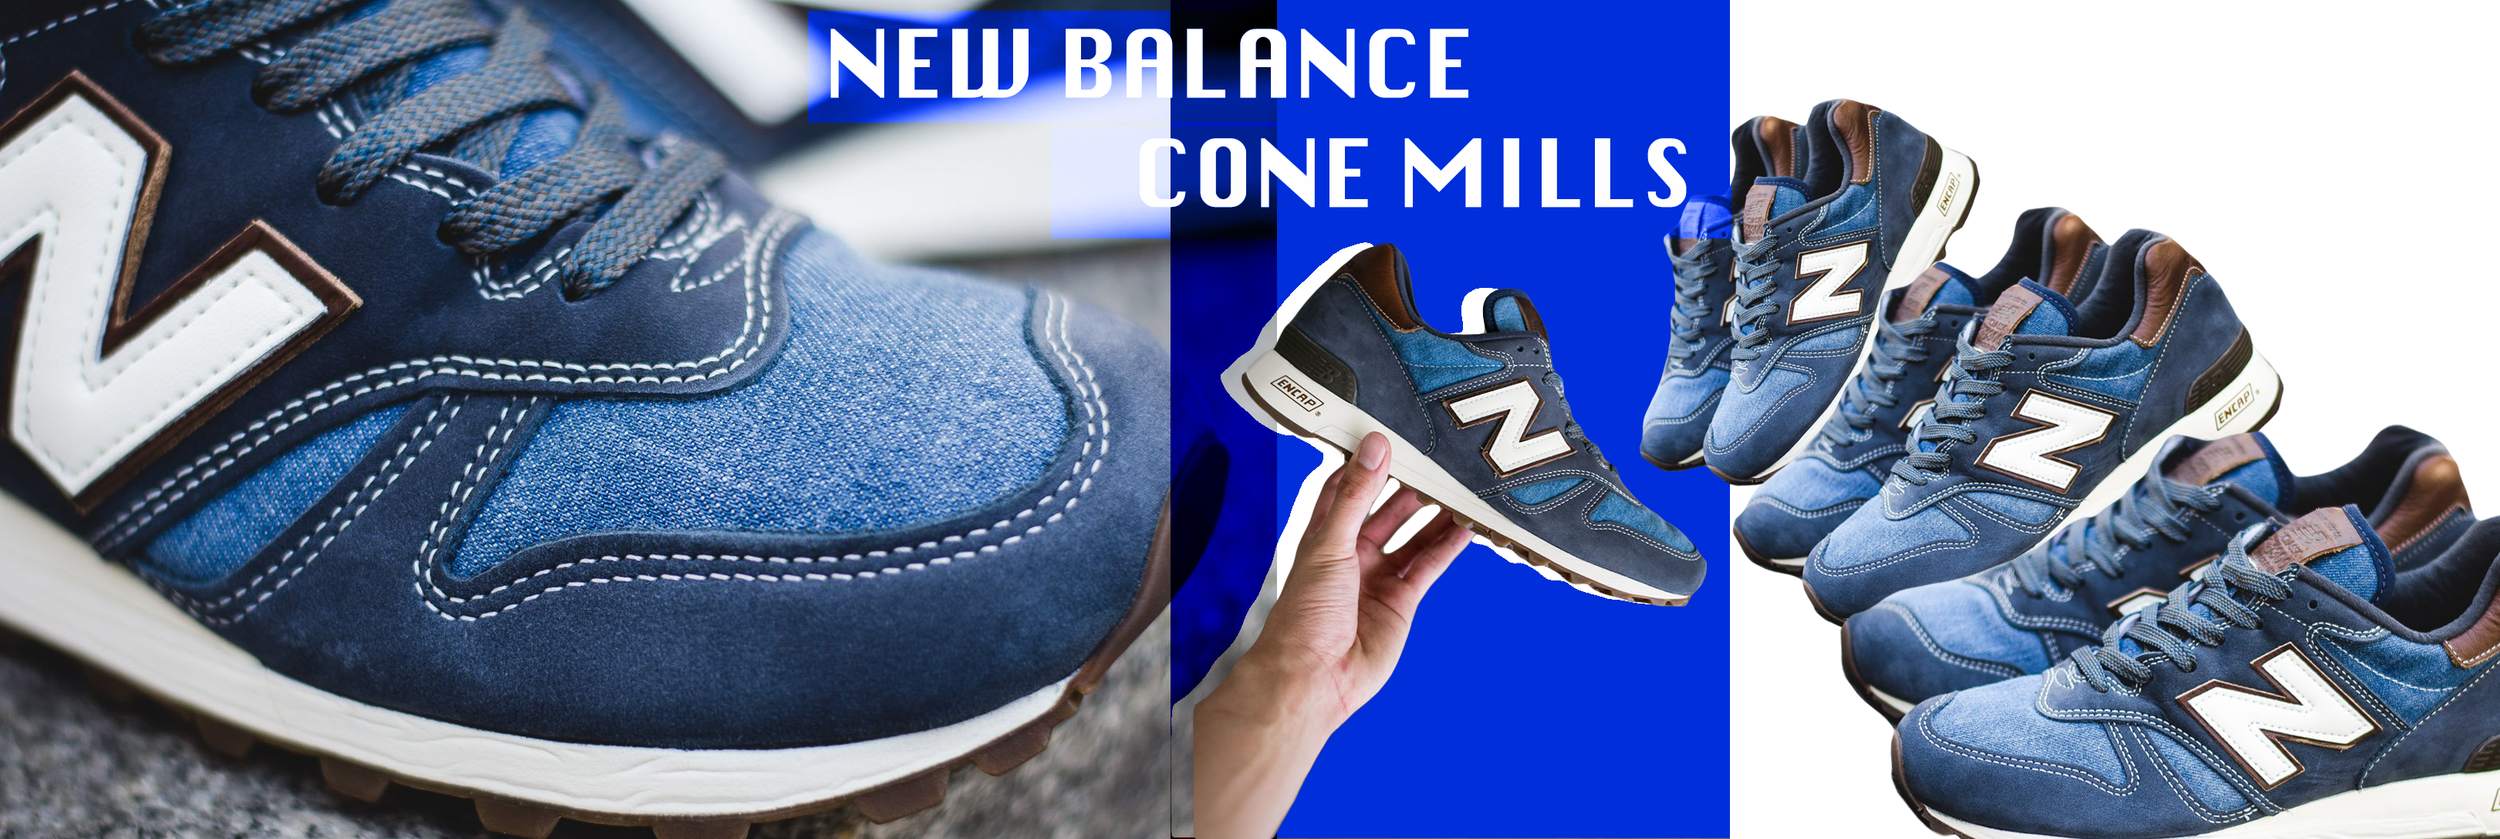 new balance x cone mills 1300cd denim sneakers